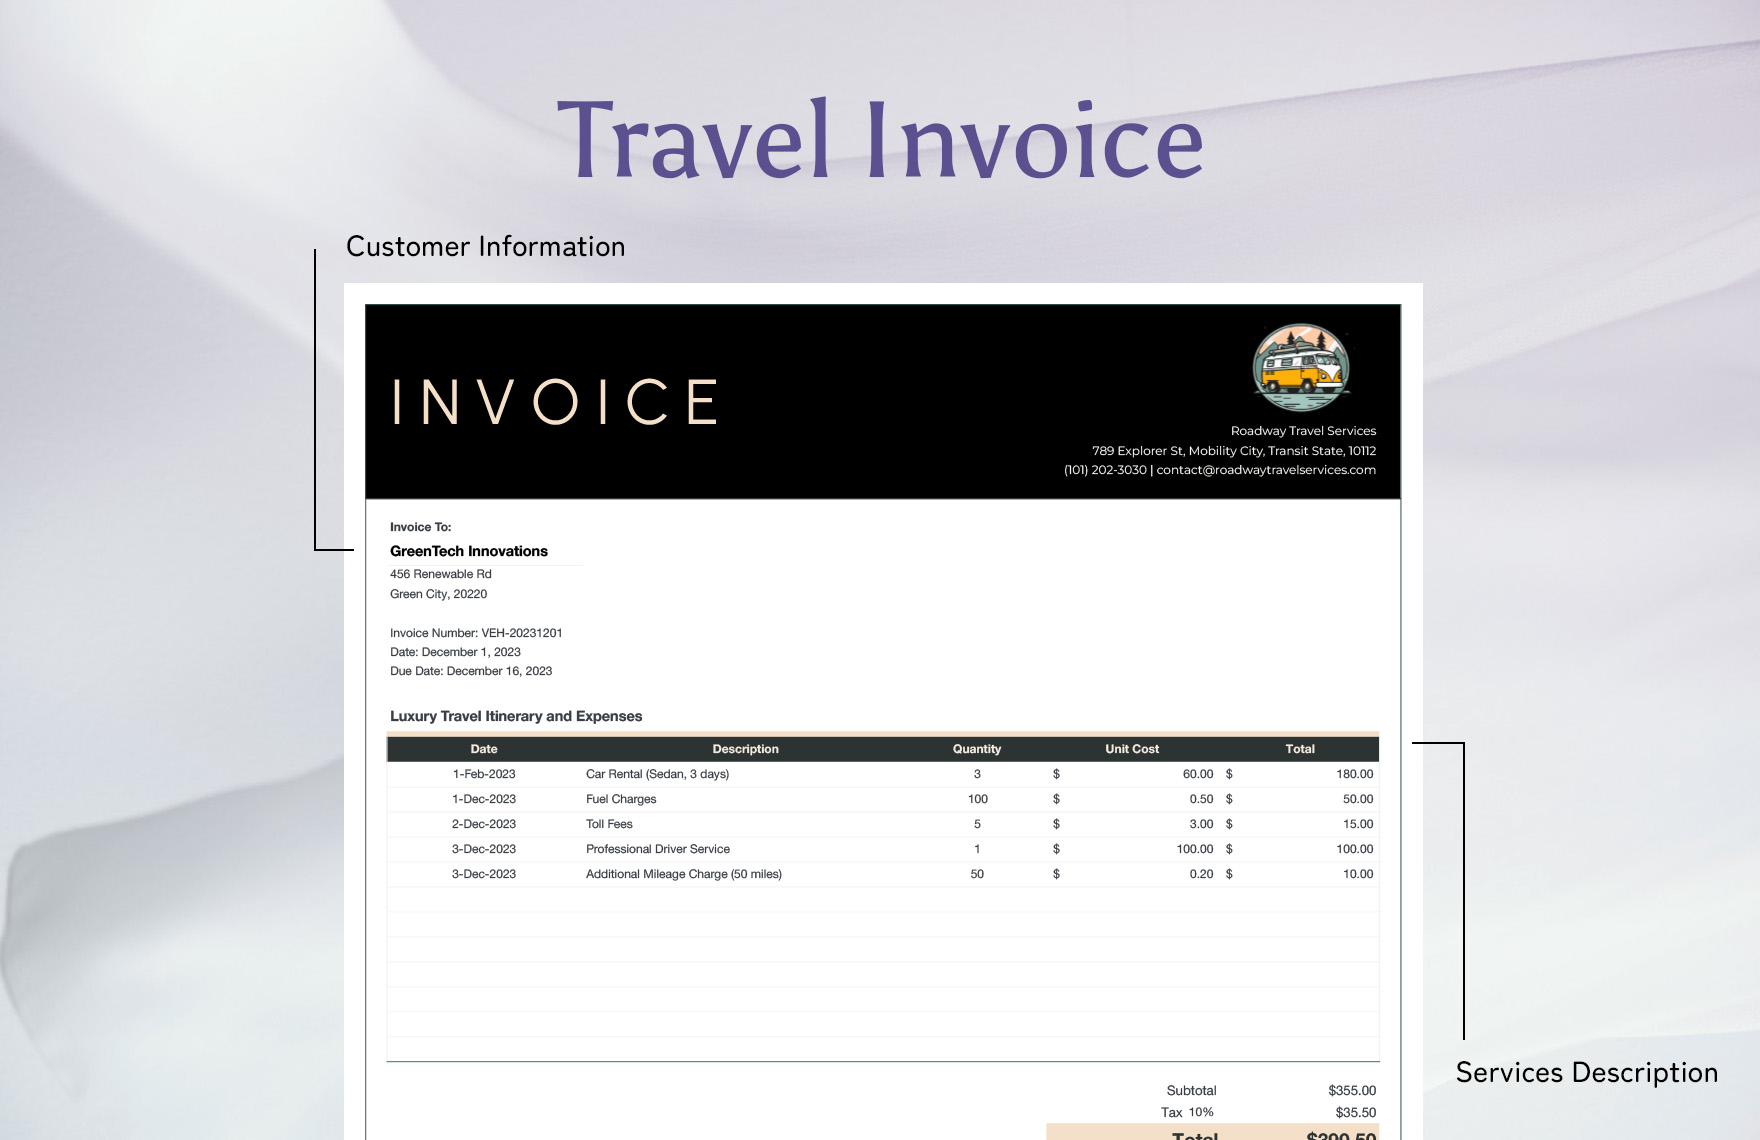 Vehicle Travel Invoice Template